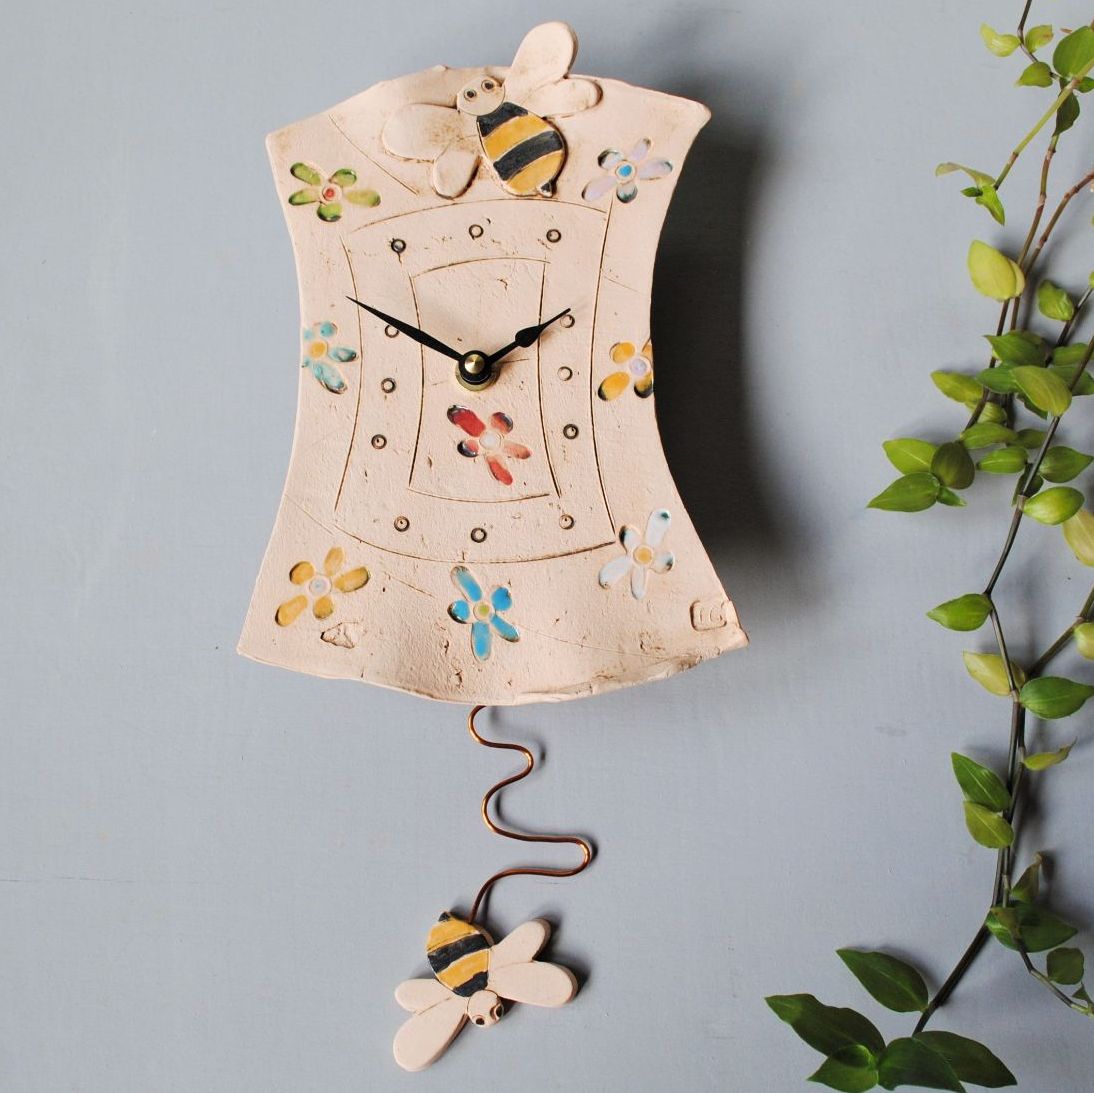 Ceramic pendulum wall clock with flowers and bee as pendulum.